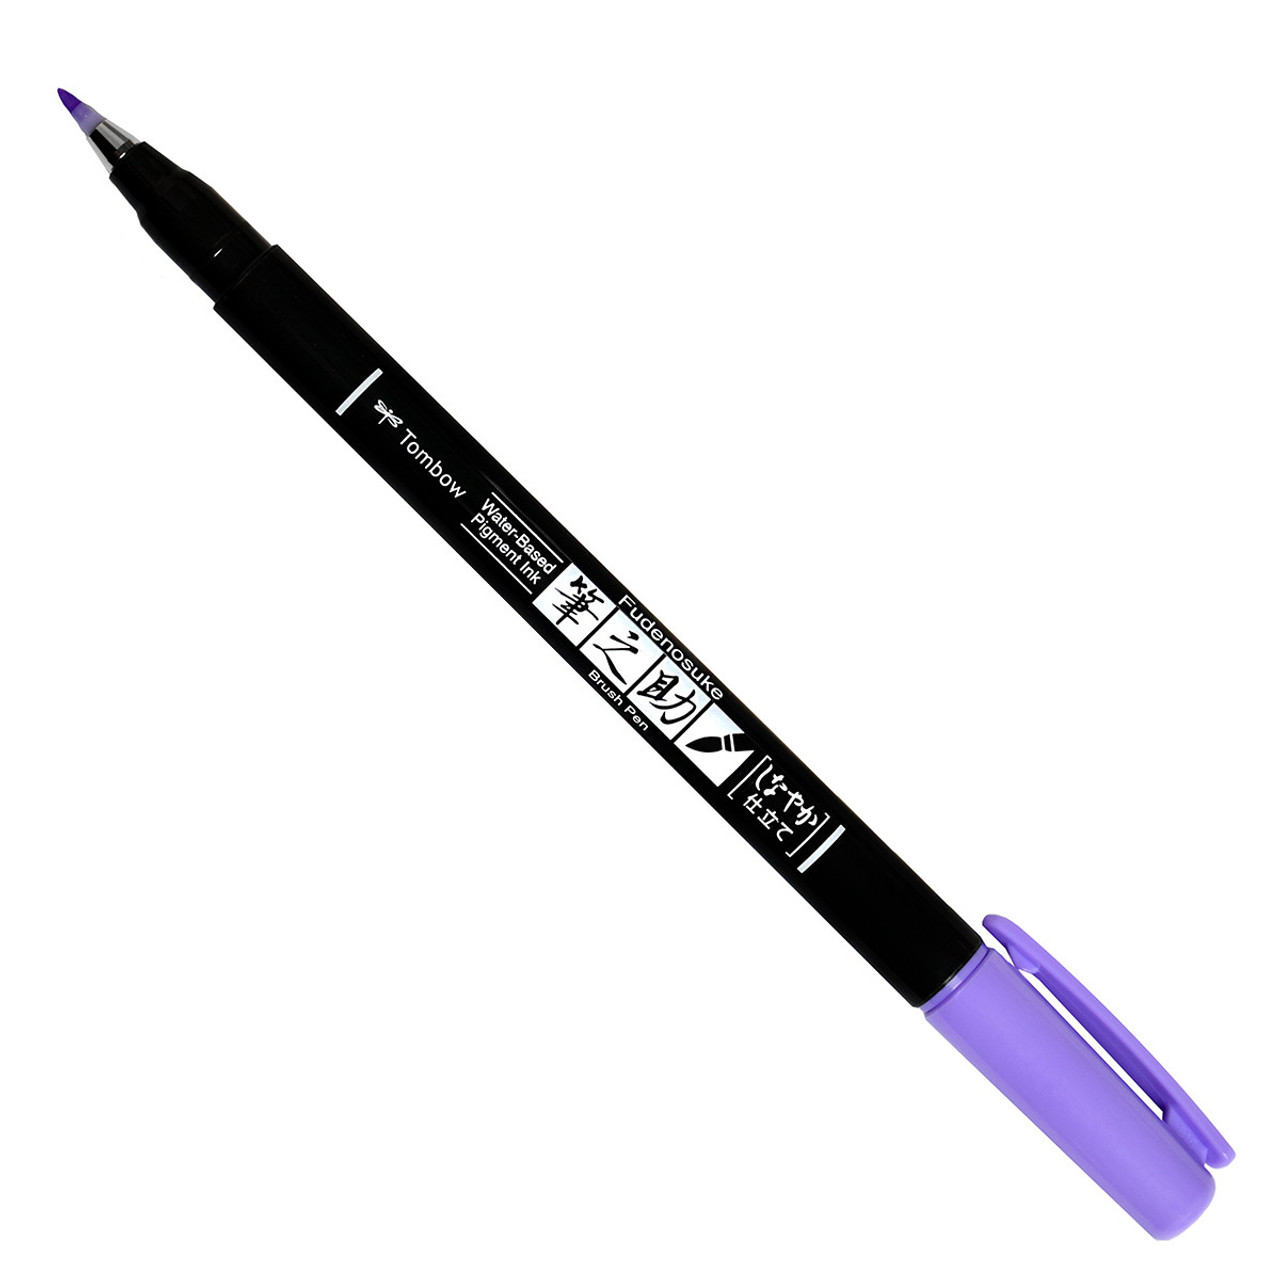 Tombow Fudenosuke Brush Pen Sets